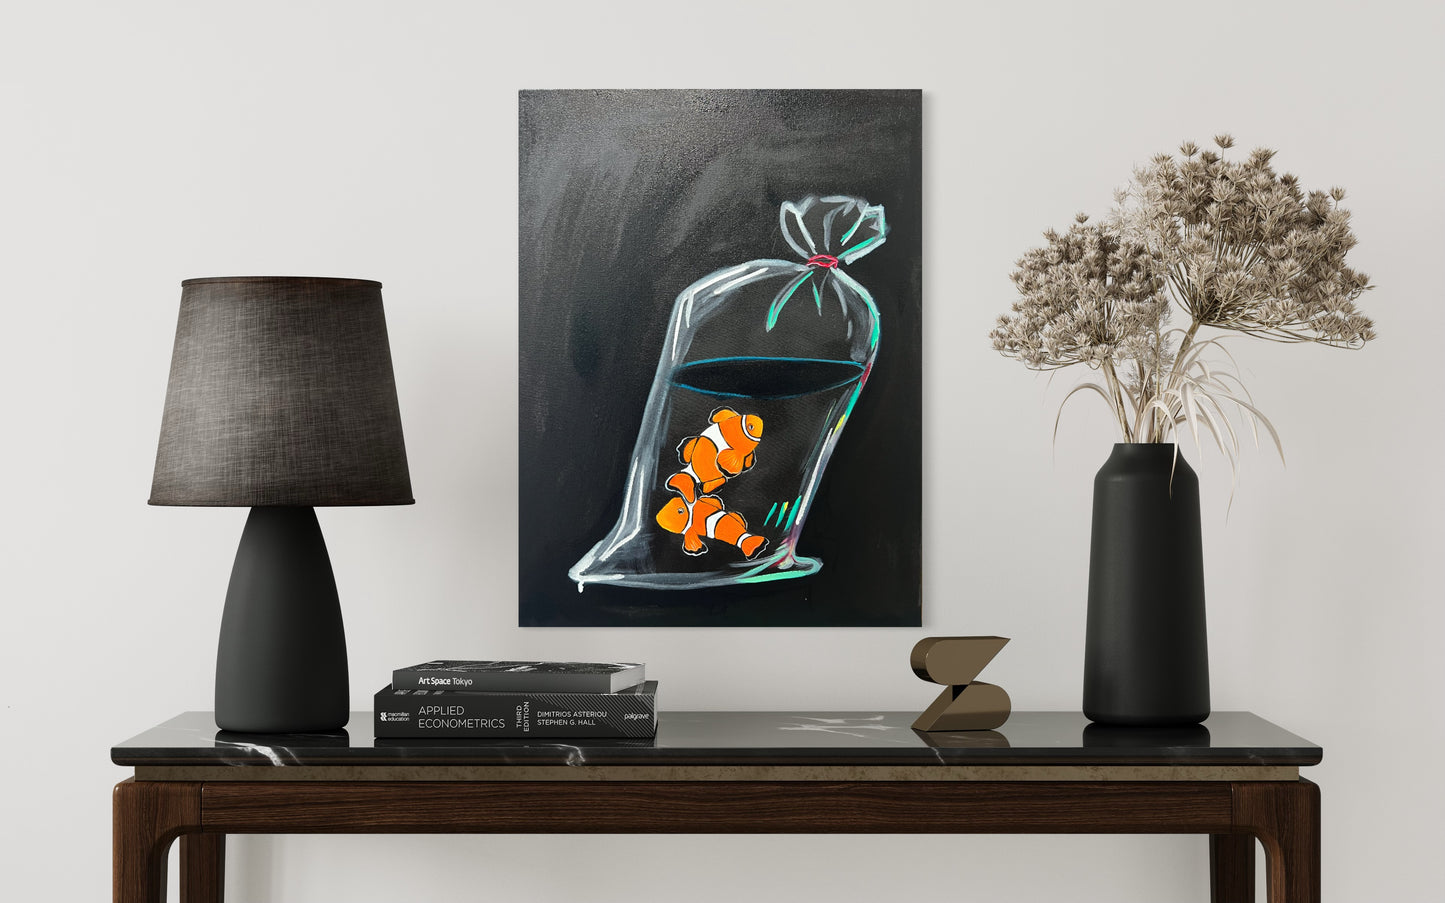 Fishy Fishy (Clown) - Canvas Print